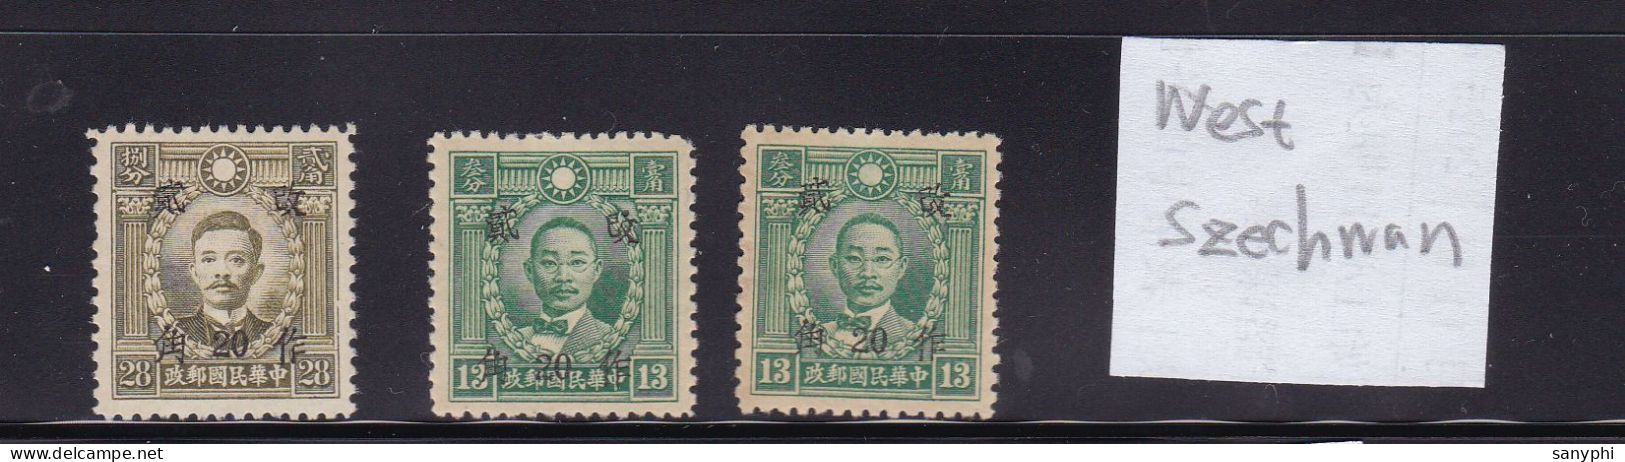 China Republic Martyt Provincial Ovpts 3 Unused Stamps-West Szechwan - 1912-1949 Republic